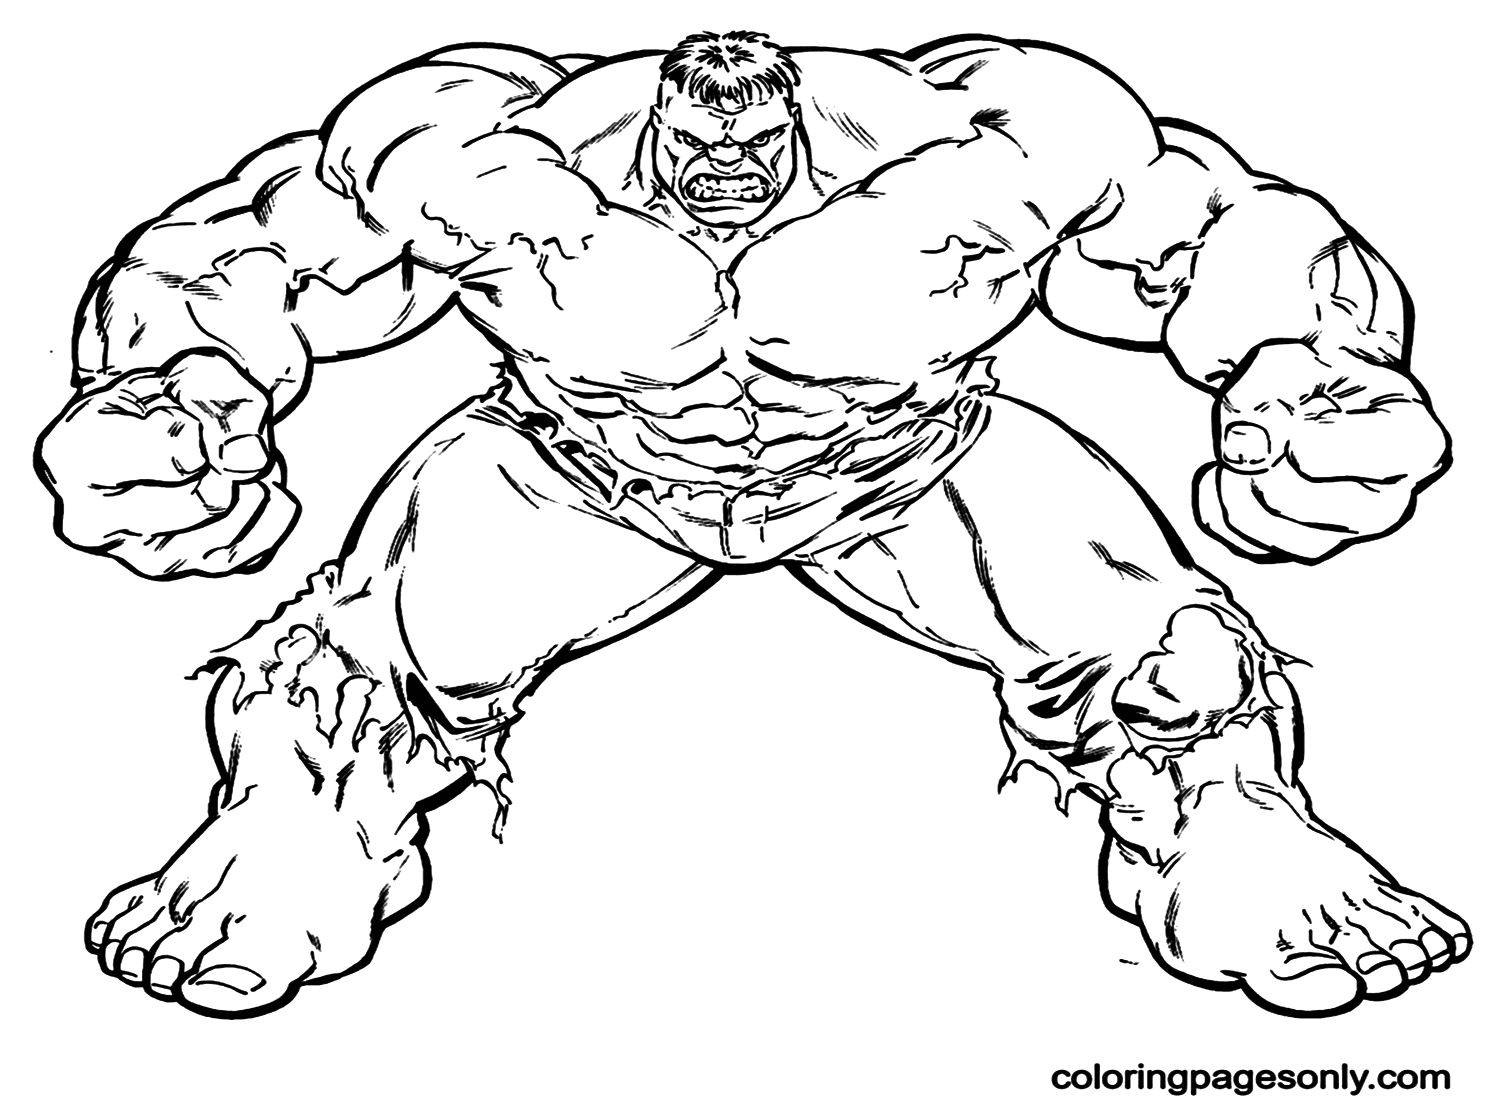 Printable Strong Incredible Hulk Coloring Pages